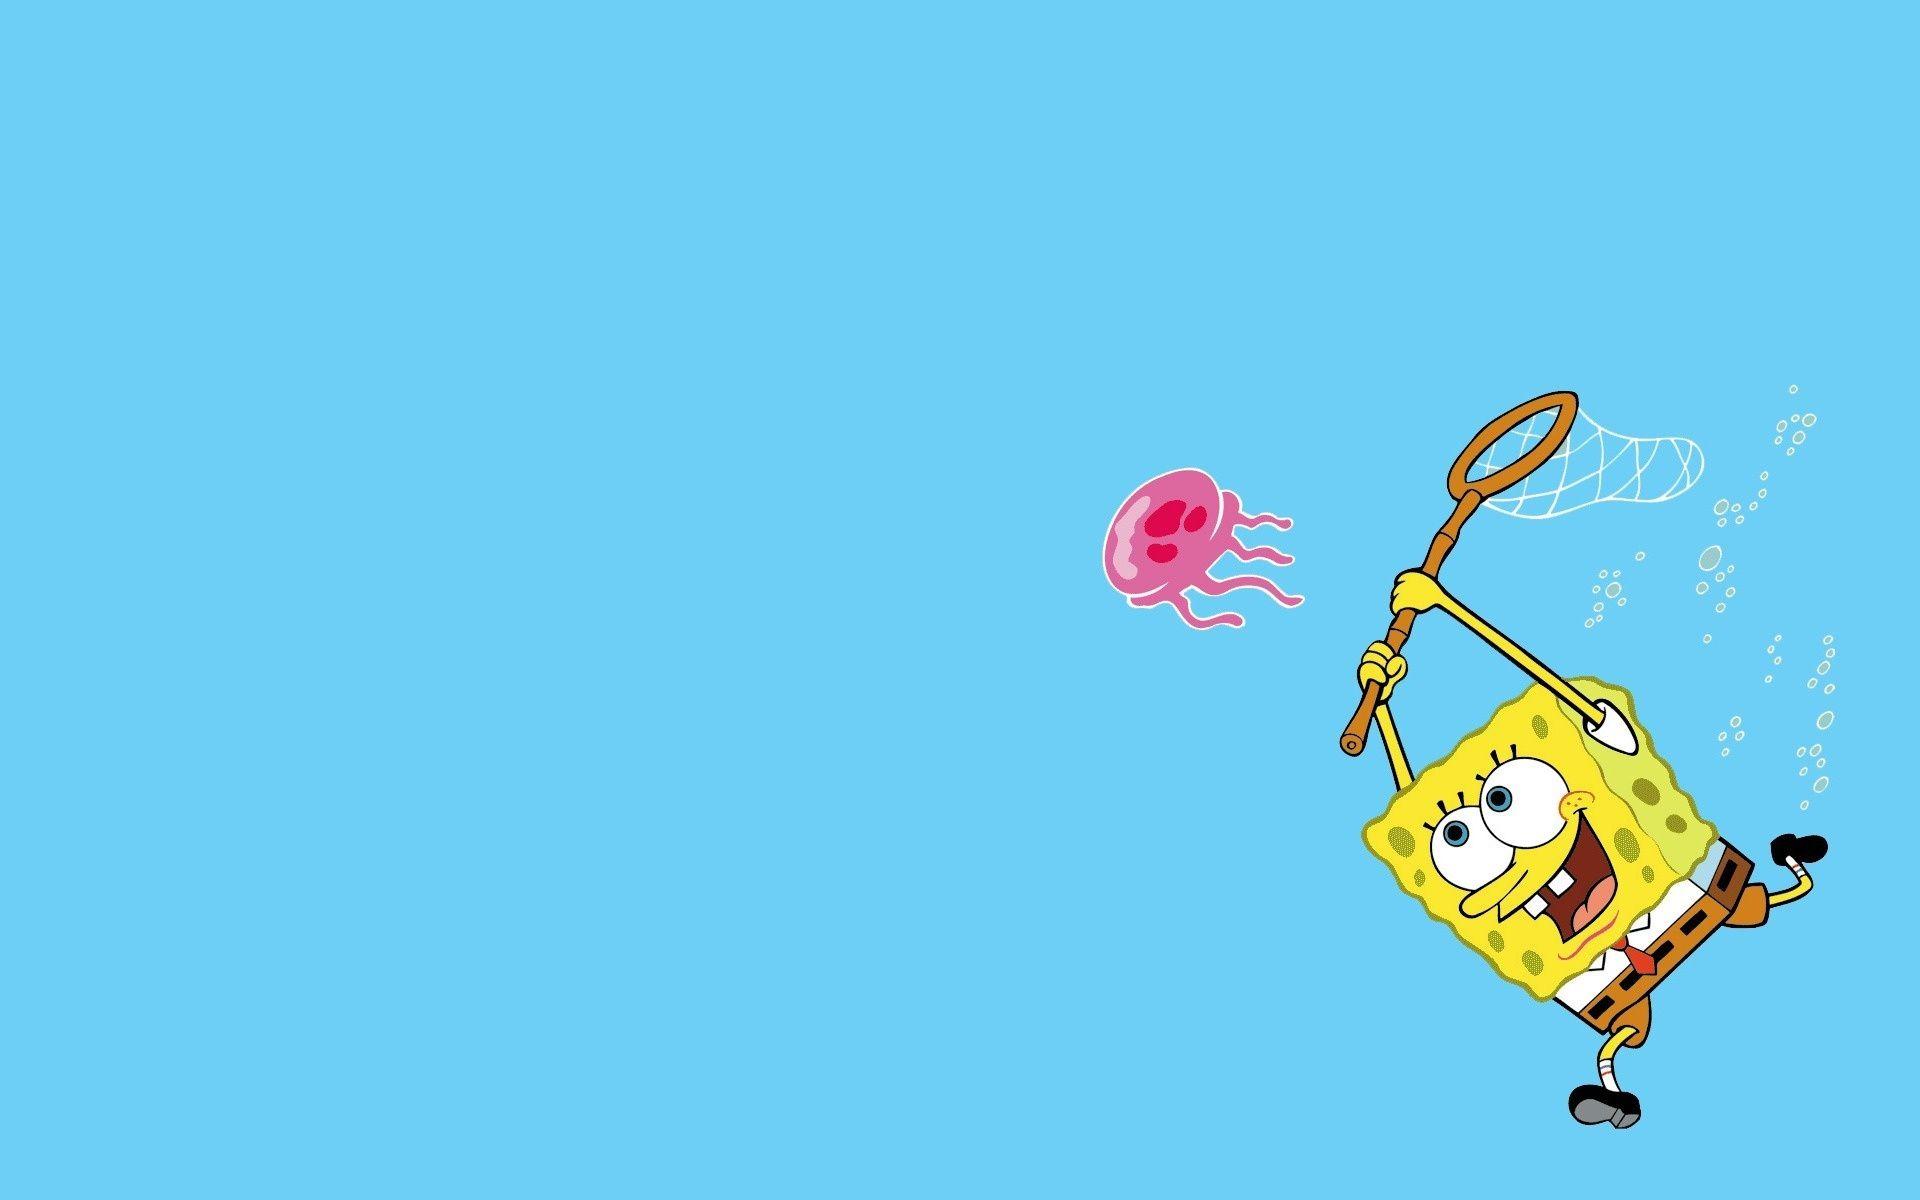 Spongebob Squarepants Wallpaper. Free Picture Download